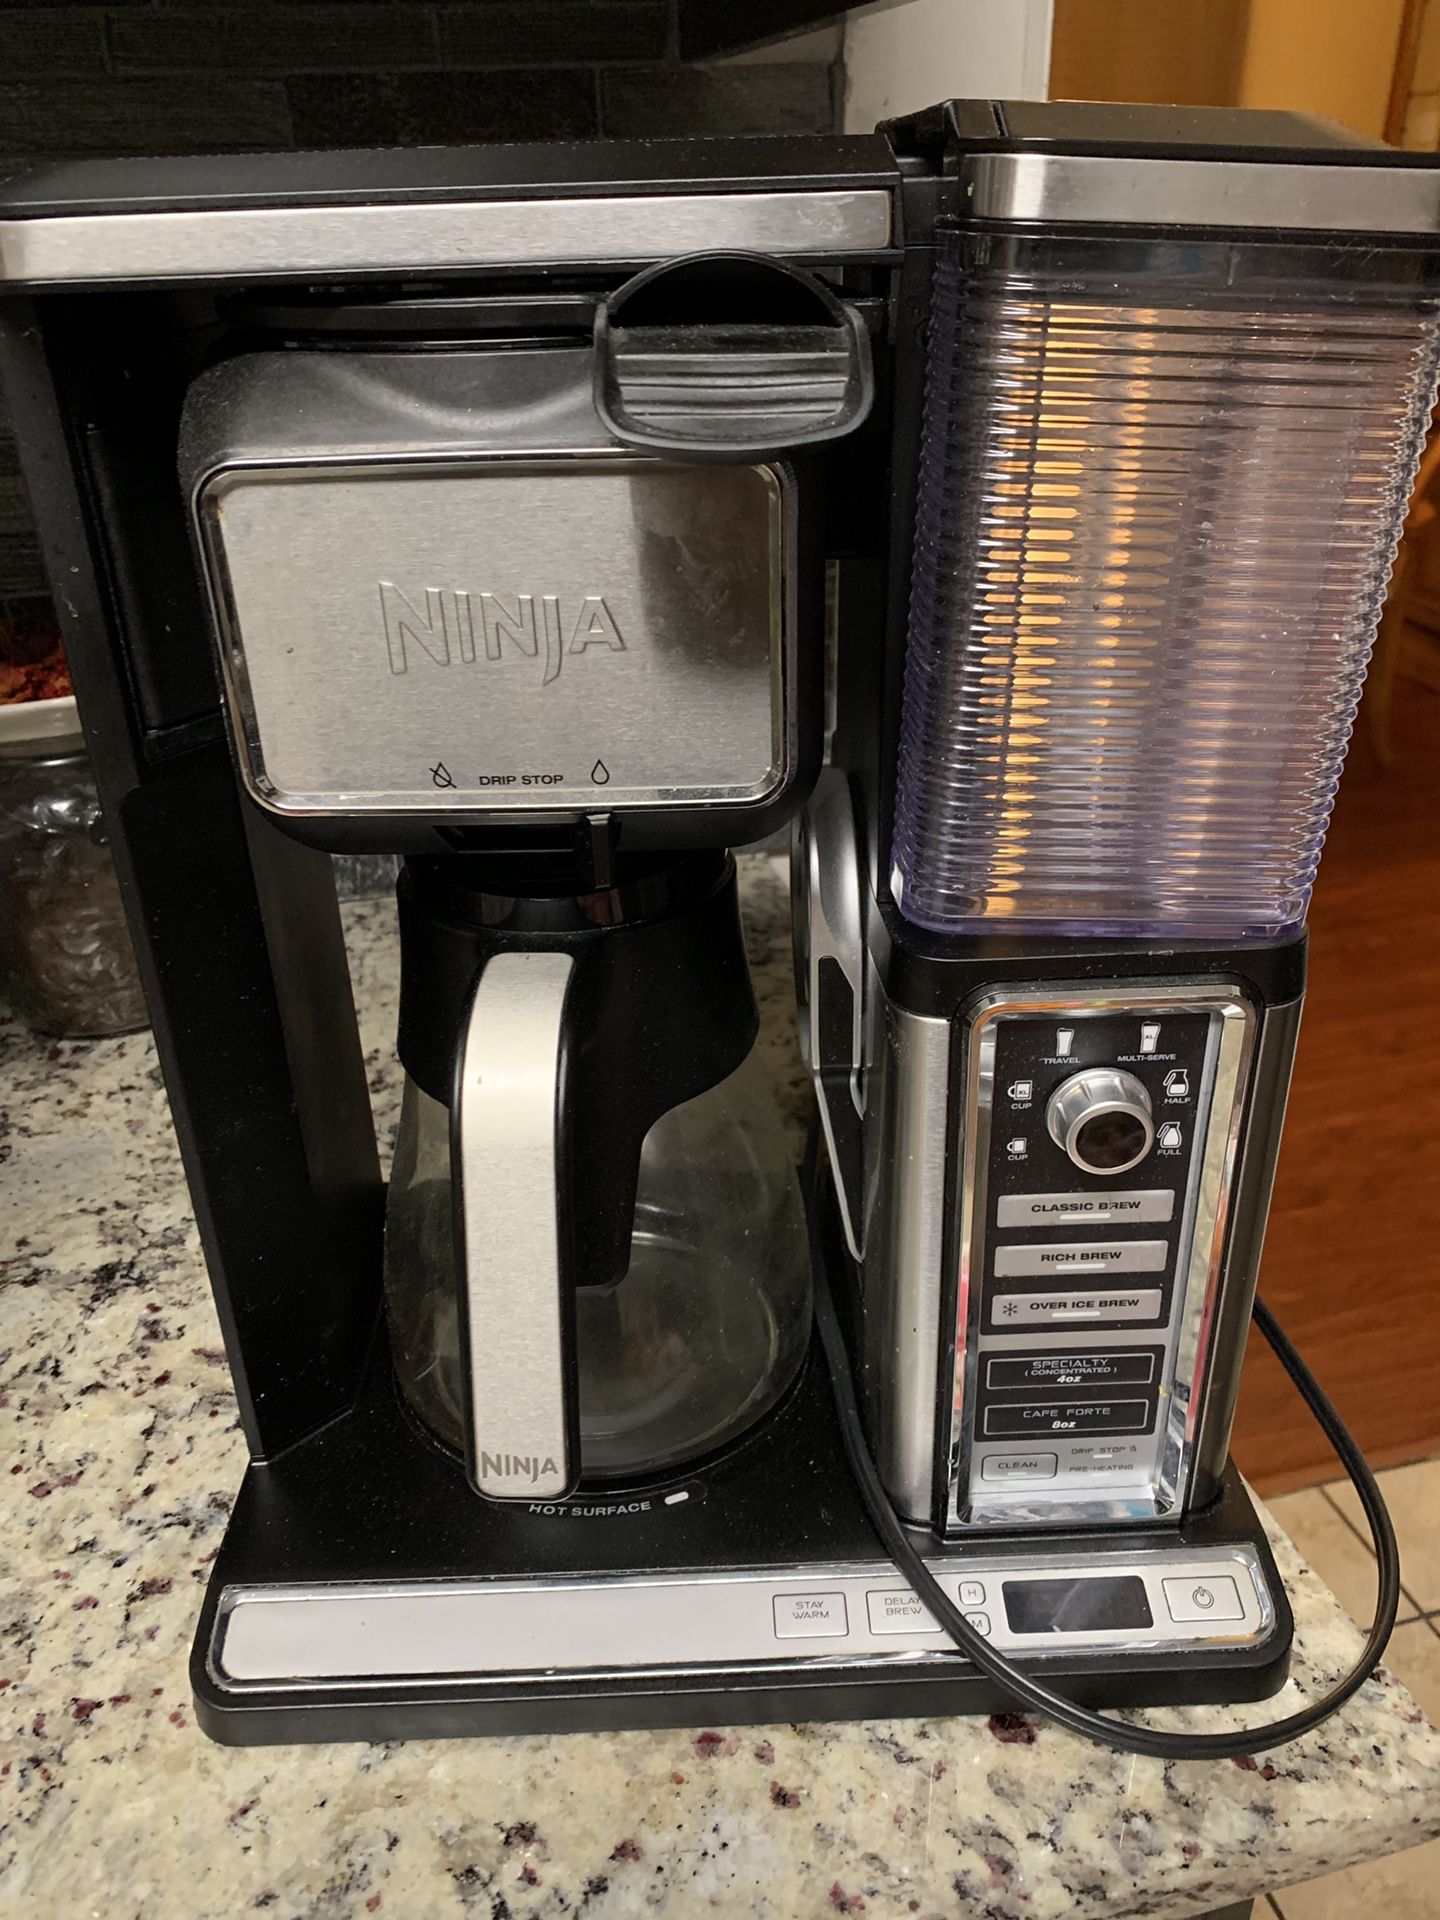 Almost new ninja coffee maker with box